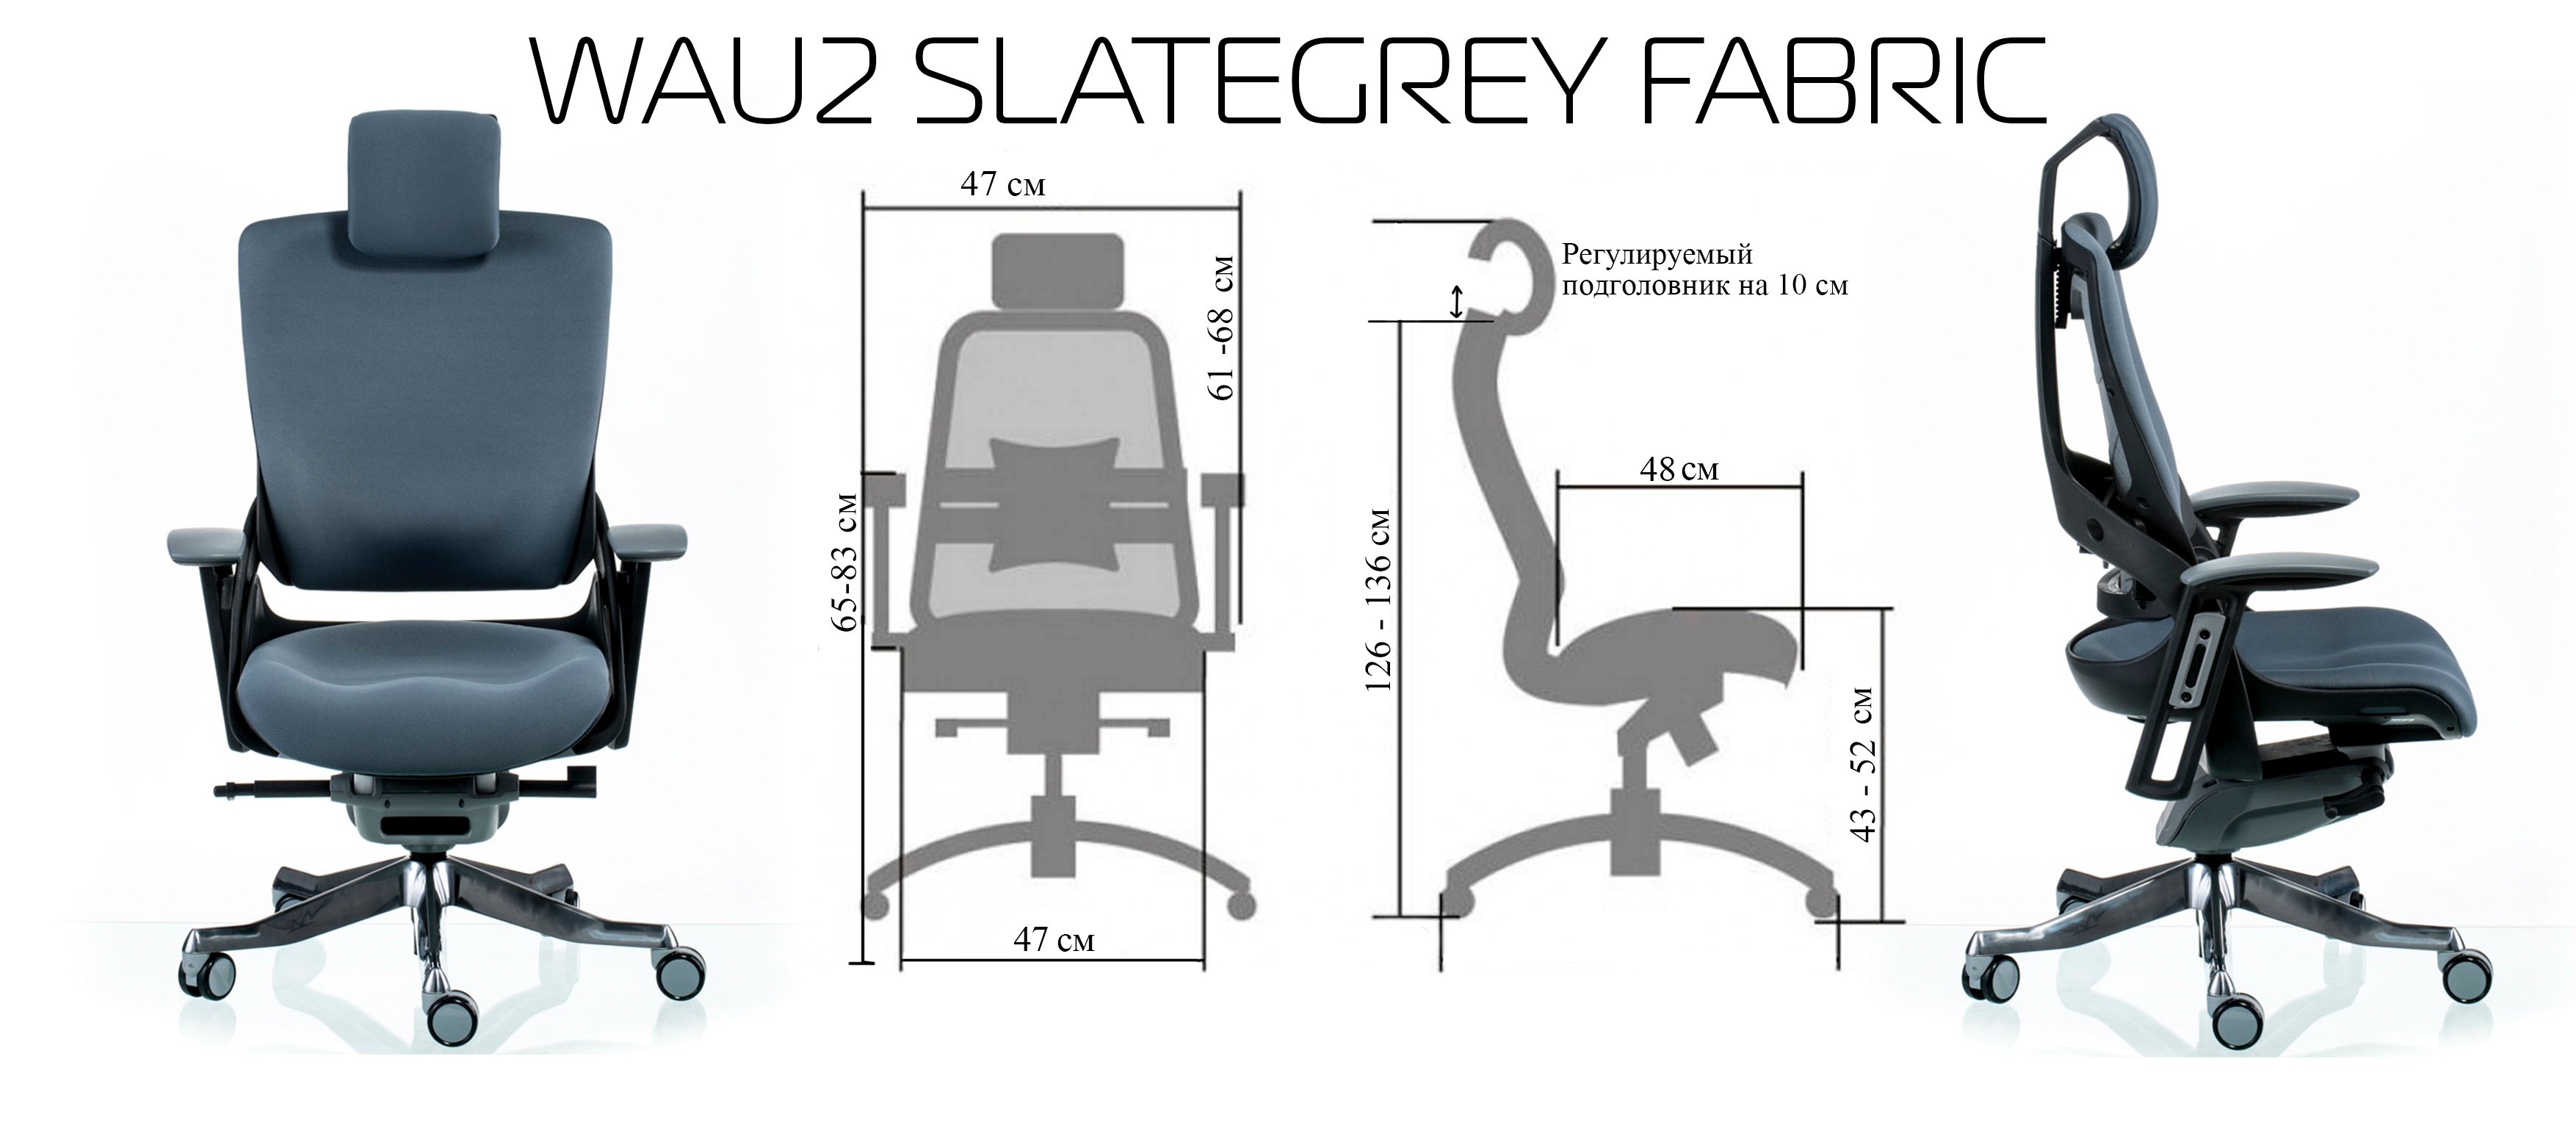 Офісне крісло Special4you Wau2 Slategrey Fabric сіре (E5456) - фото 19